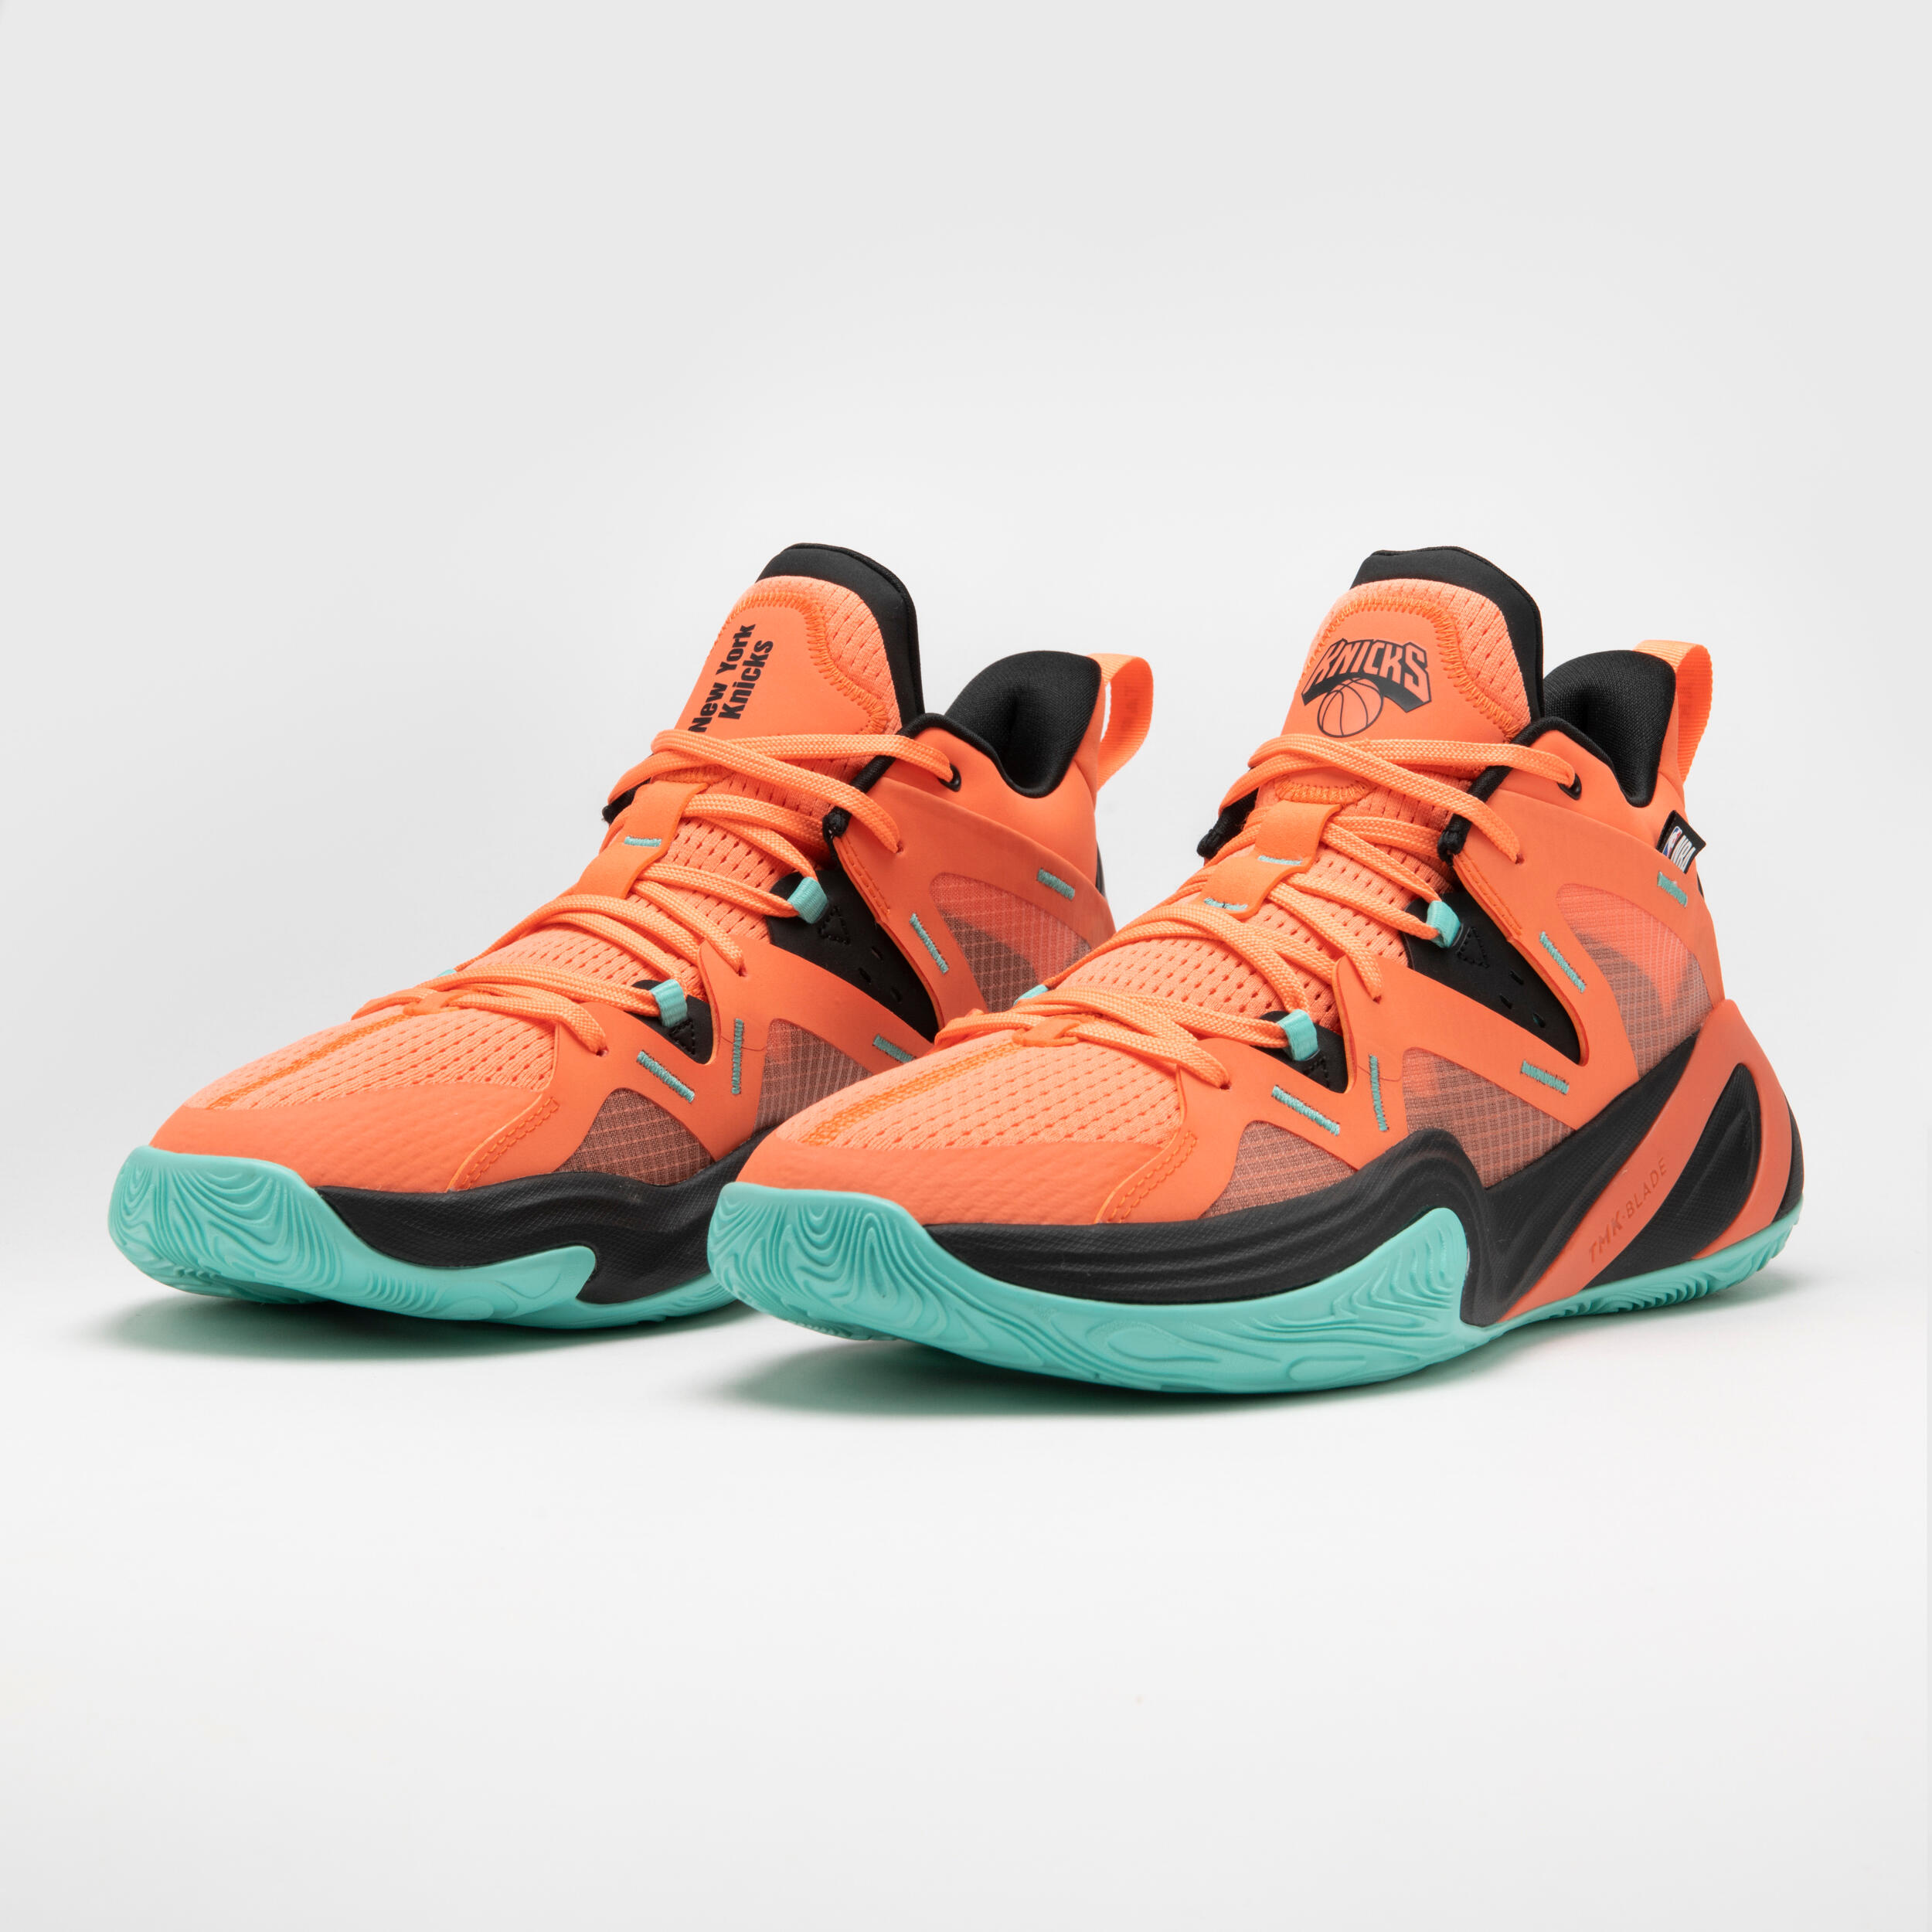 Men's/Women's Basketball Shoes 900 NBA MID-3 - New York Knicks/Orange 7/11